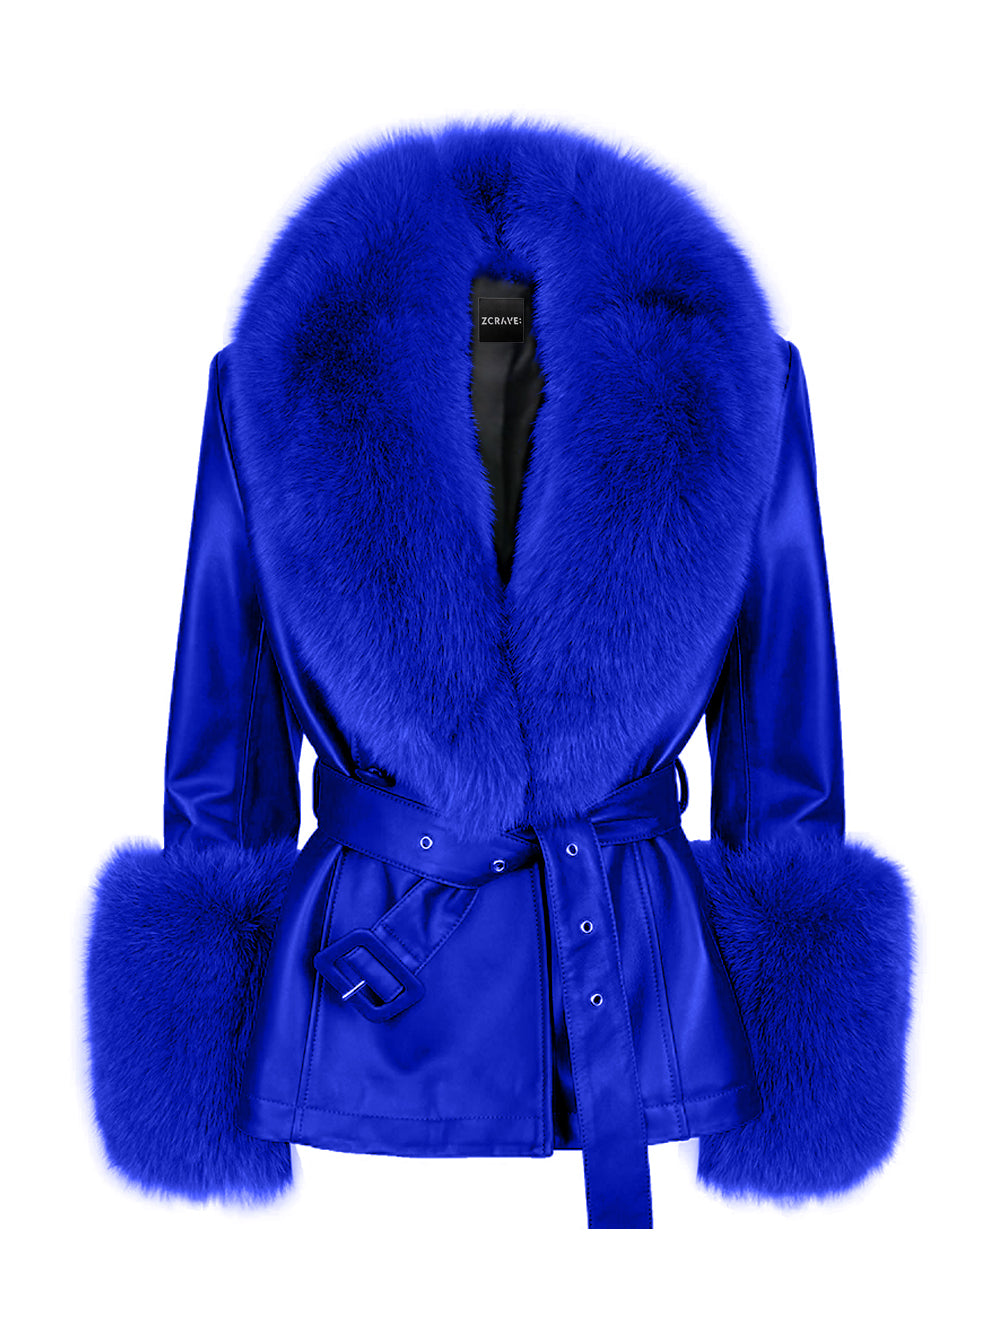 Fur Foxy Leather Short Coat in Blue